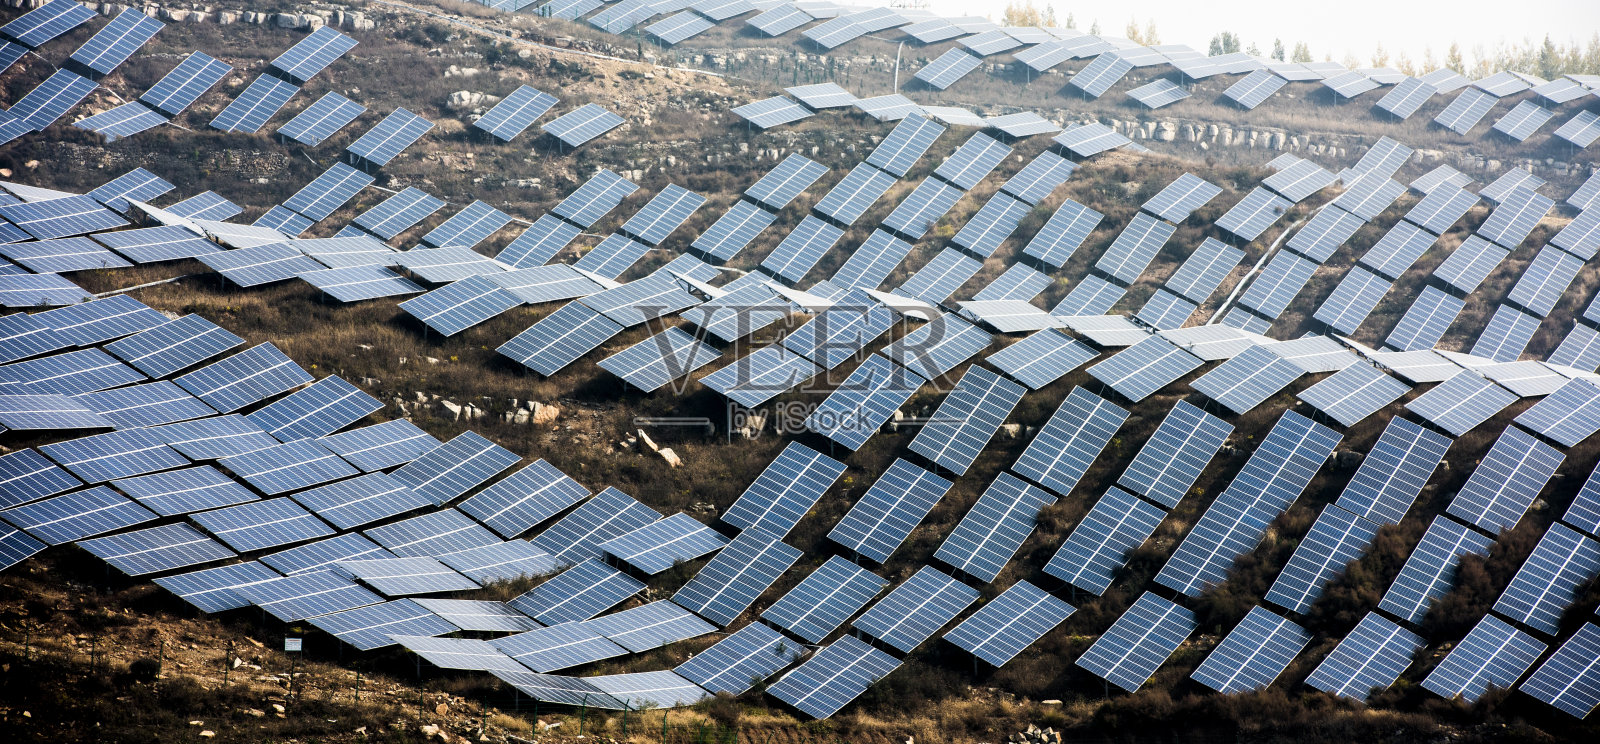 Clean energy照片摄影图片